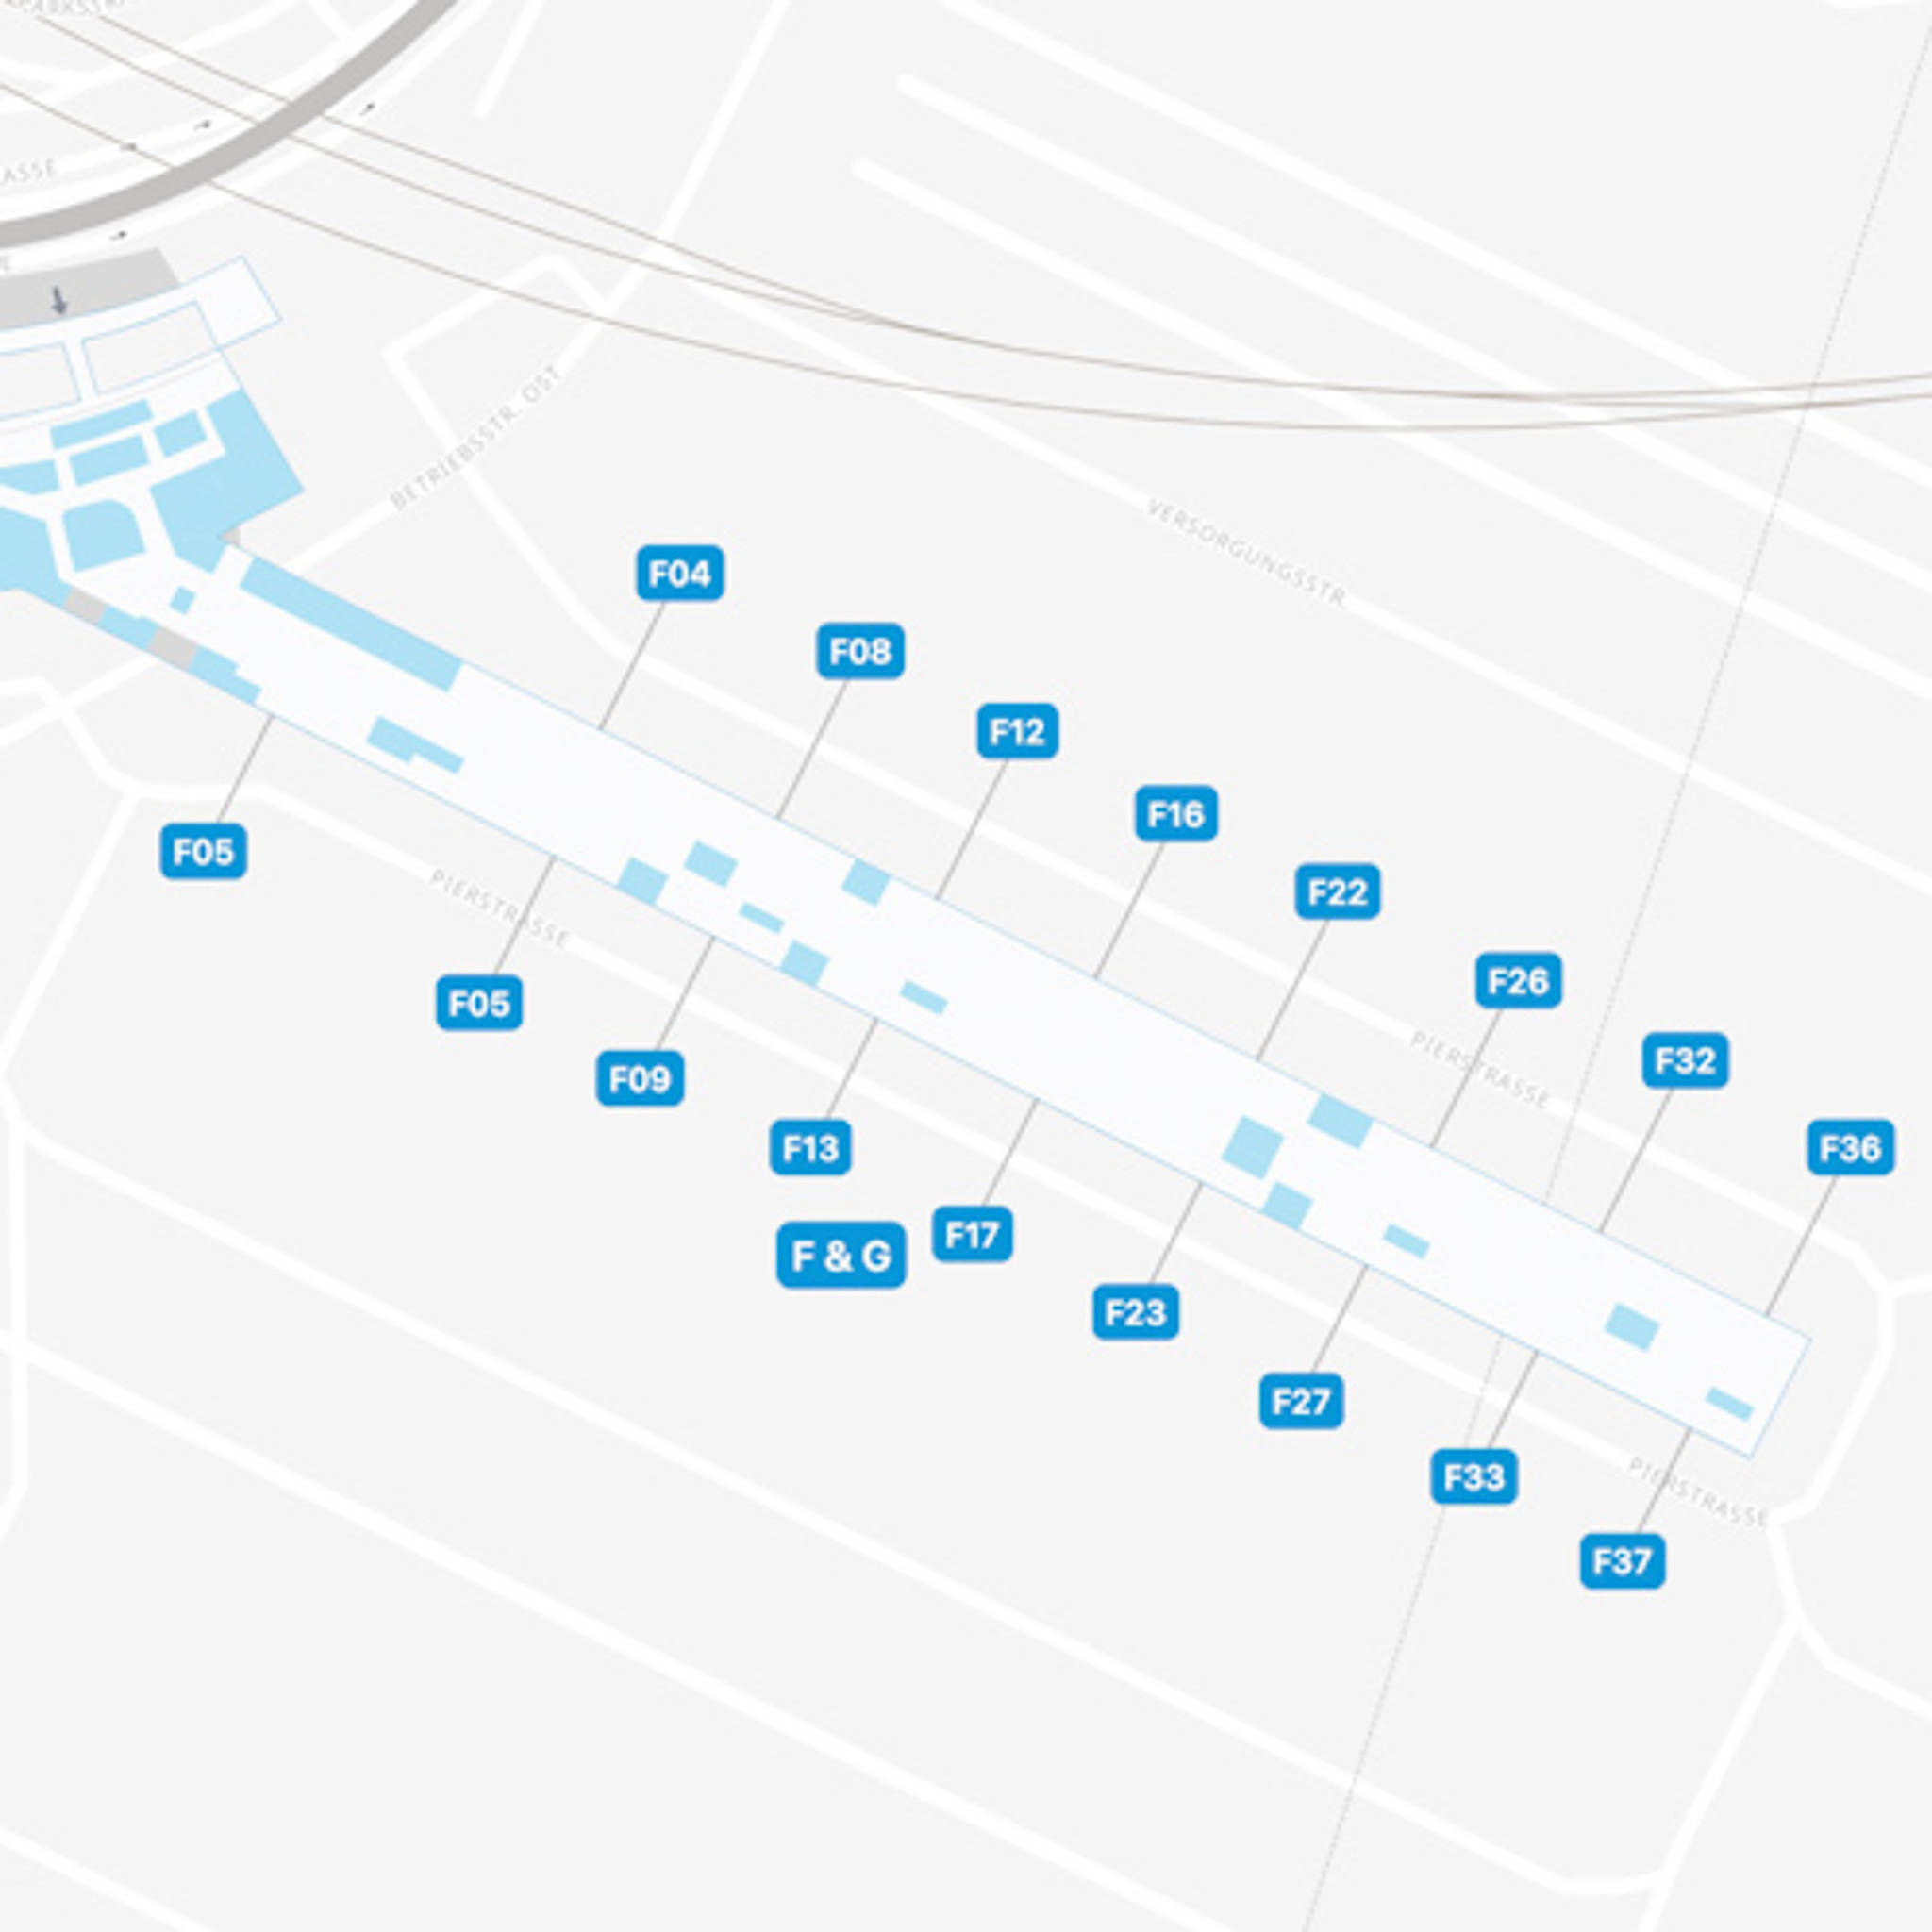 vienna-airport-map-guide-to-vie-s-terminals